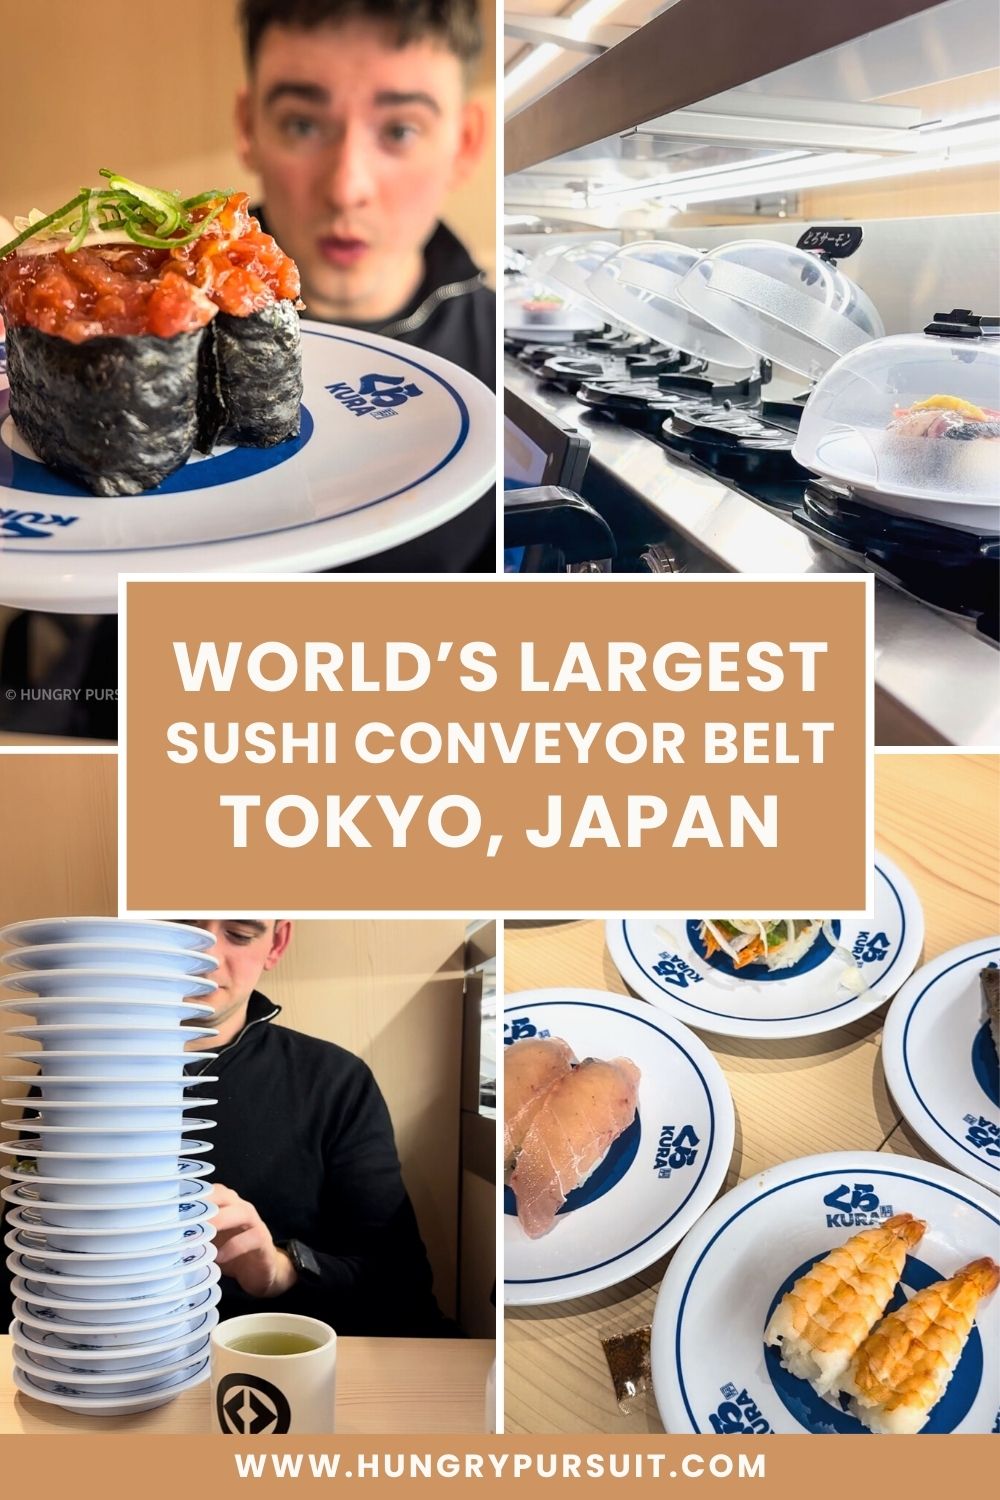 Sushi conveyor belt tokyo japan kura sushi